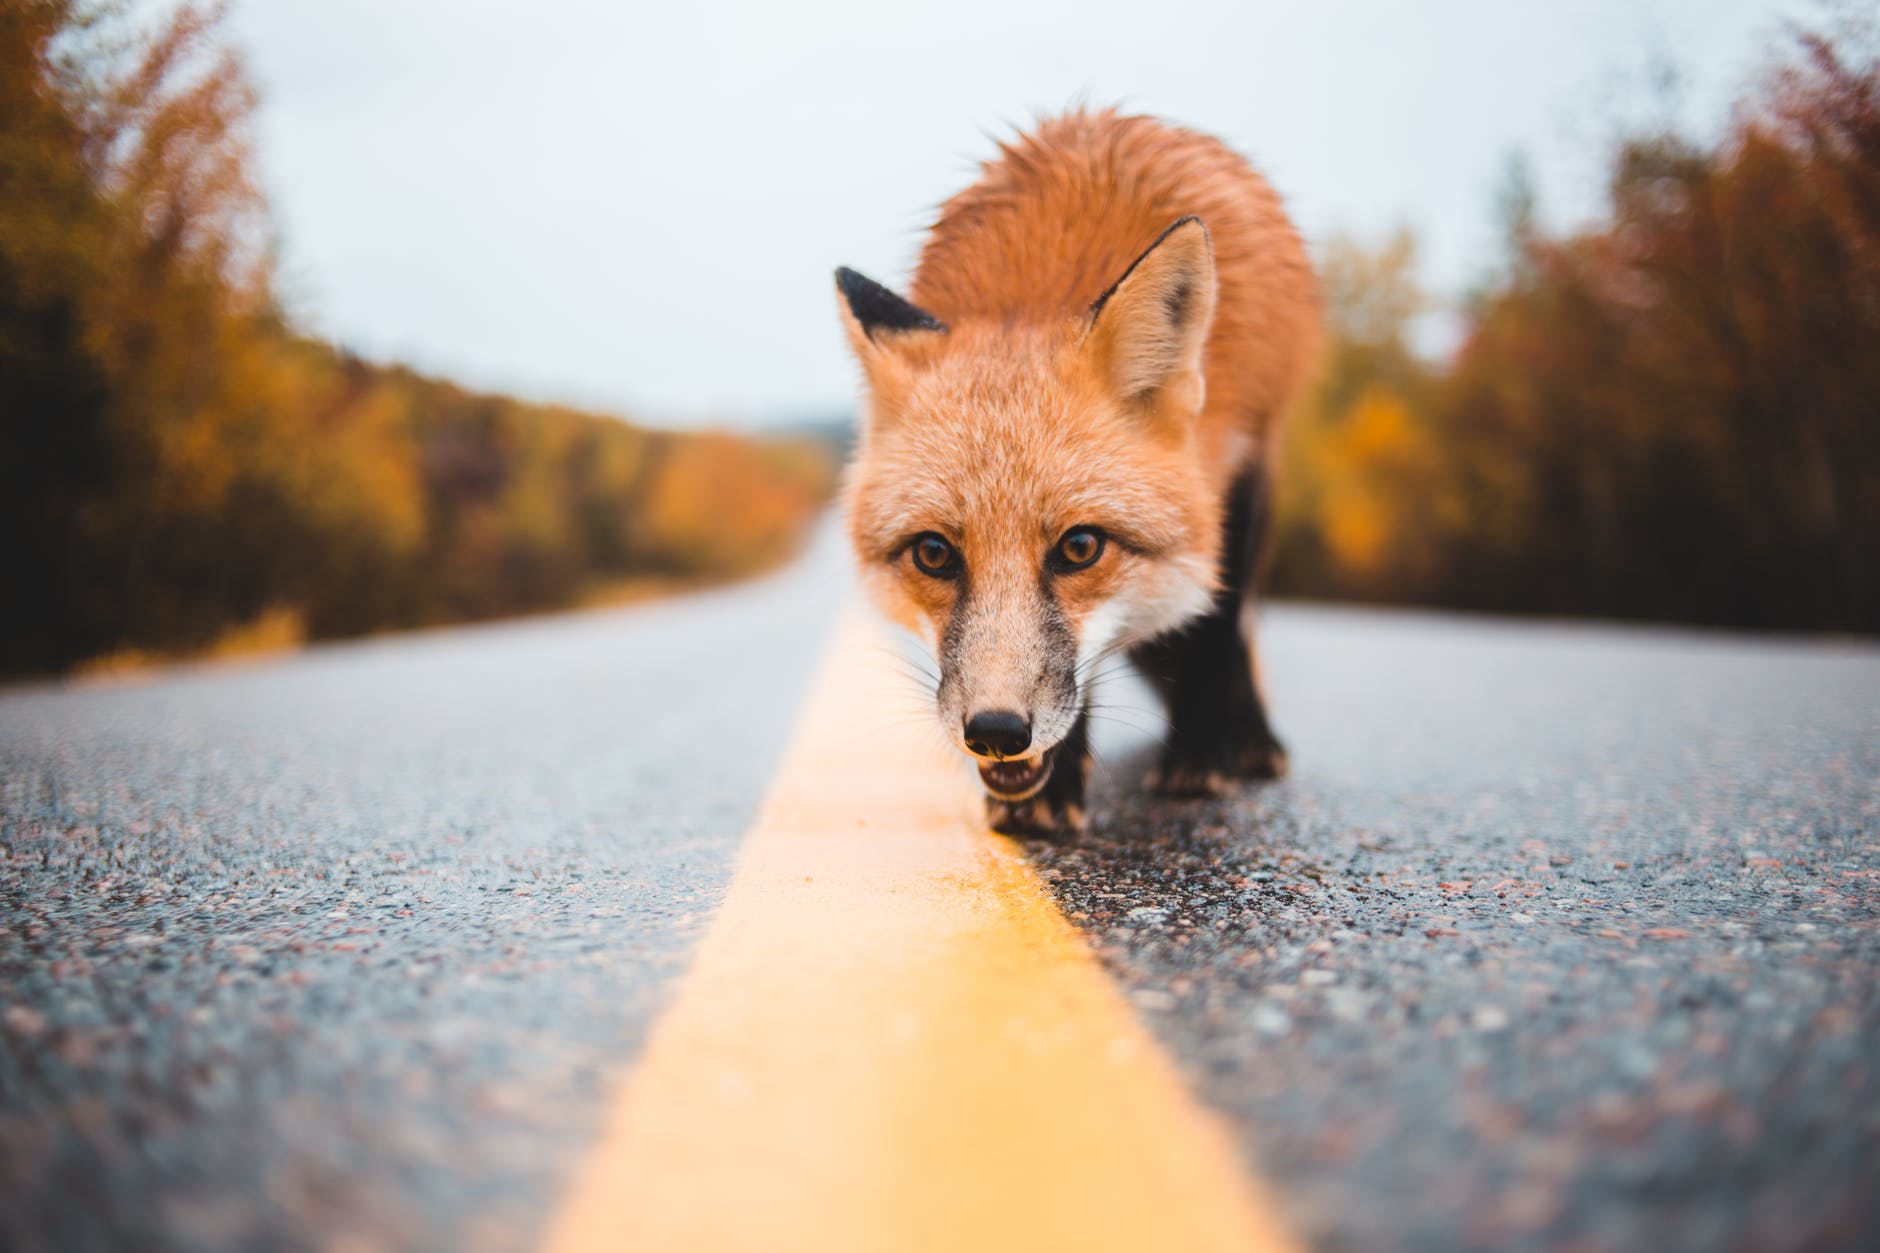 colorful fox walking on empty road